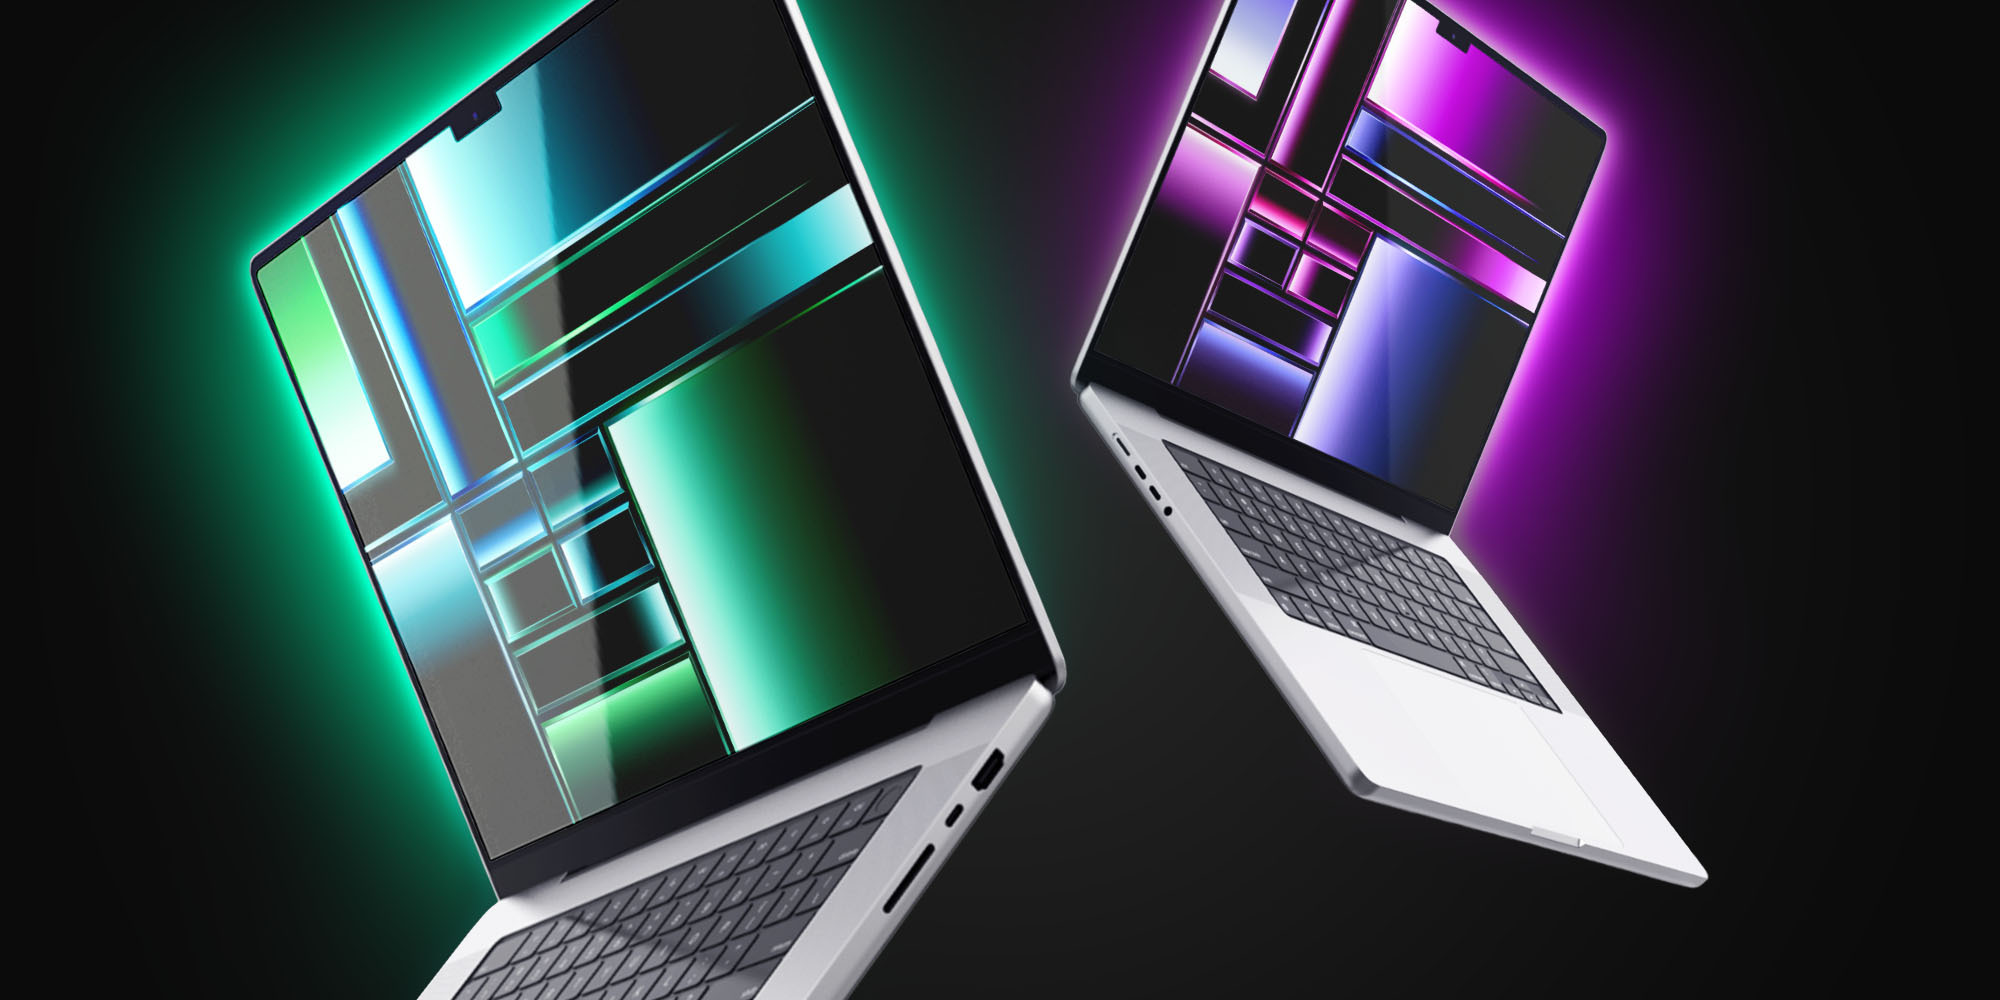 MacBook Pro Laptop Purple Light Ultra HD Desktop Background Wallpaper for 4K  UHD TV : Widescreen & UltraWide Desktop & Laptop : Multi Display, Dual &  Triple Monitor : Tablet : Smartphone